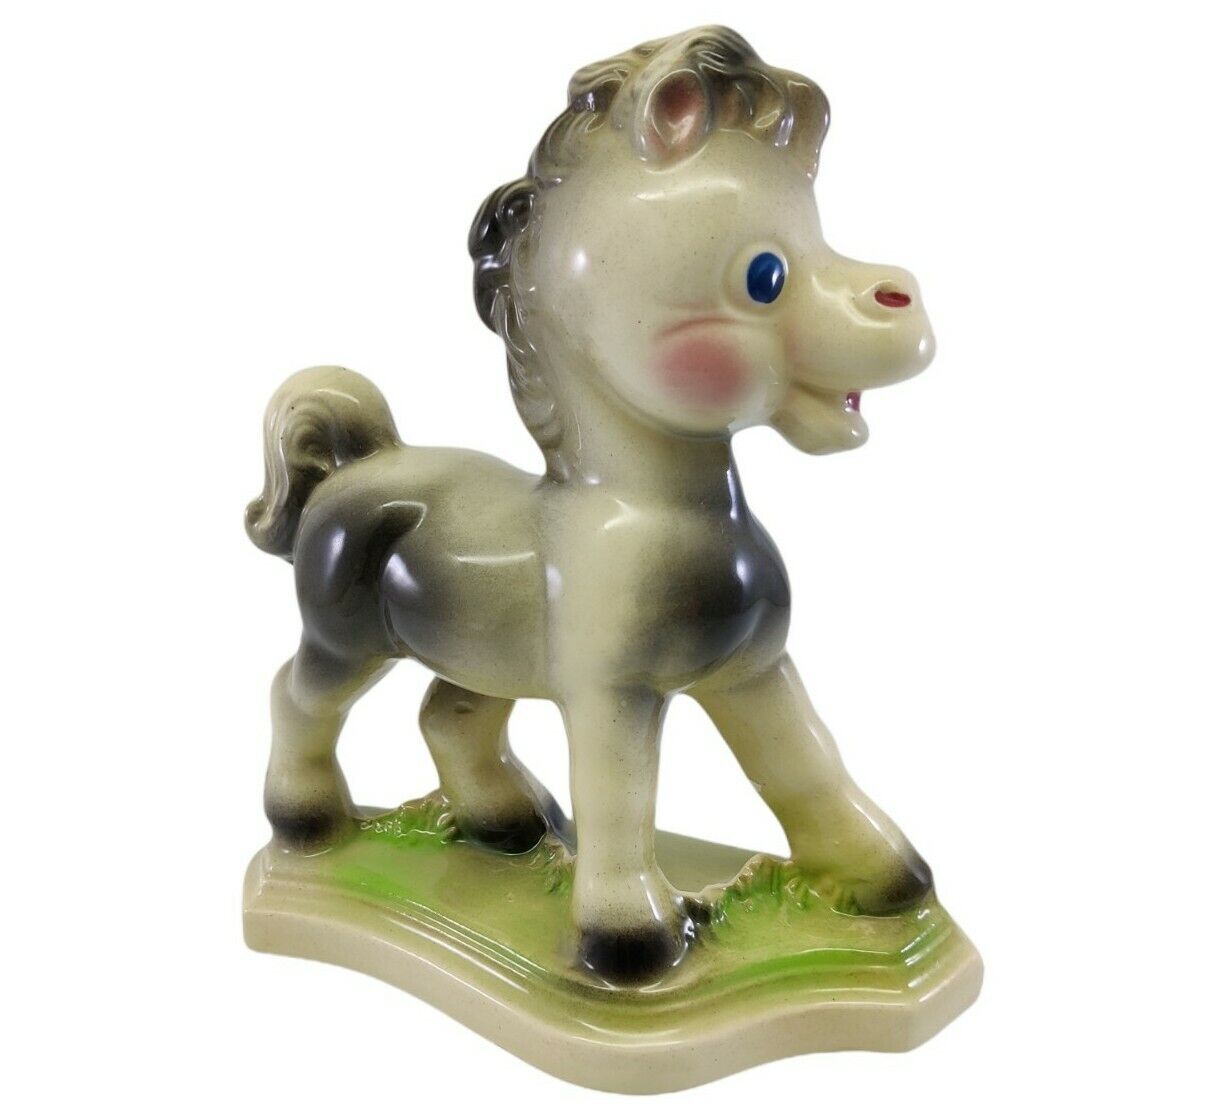 VTG Remple Ceramic Pony Horse 1950s Nursery Decor Retro Figurine